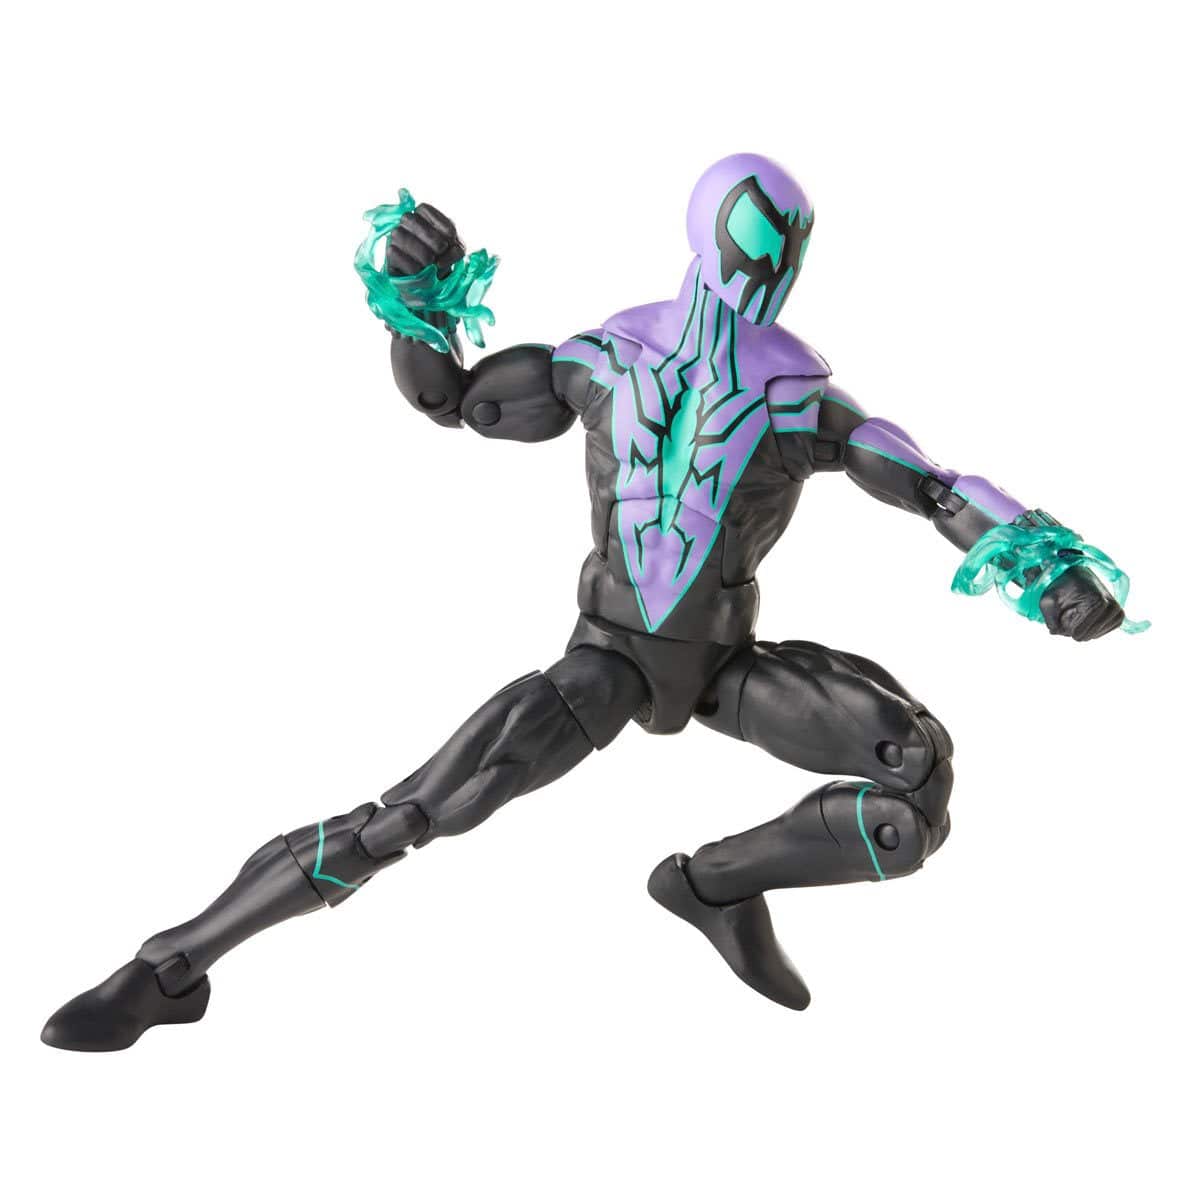 Spider-Man Retro Marvel Legends Chasm 6-Inch Action Figure Attack Pose